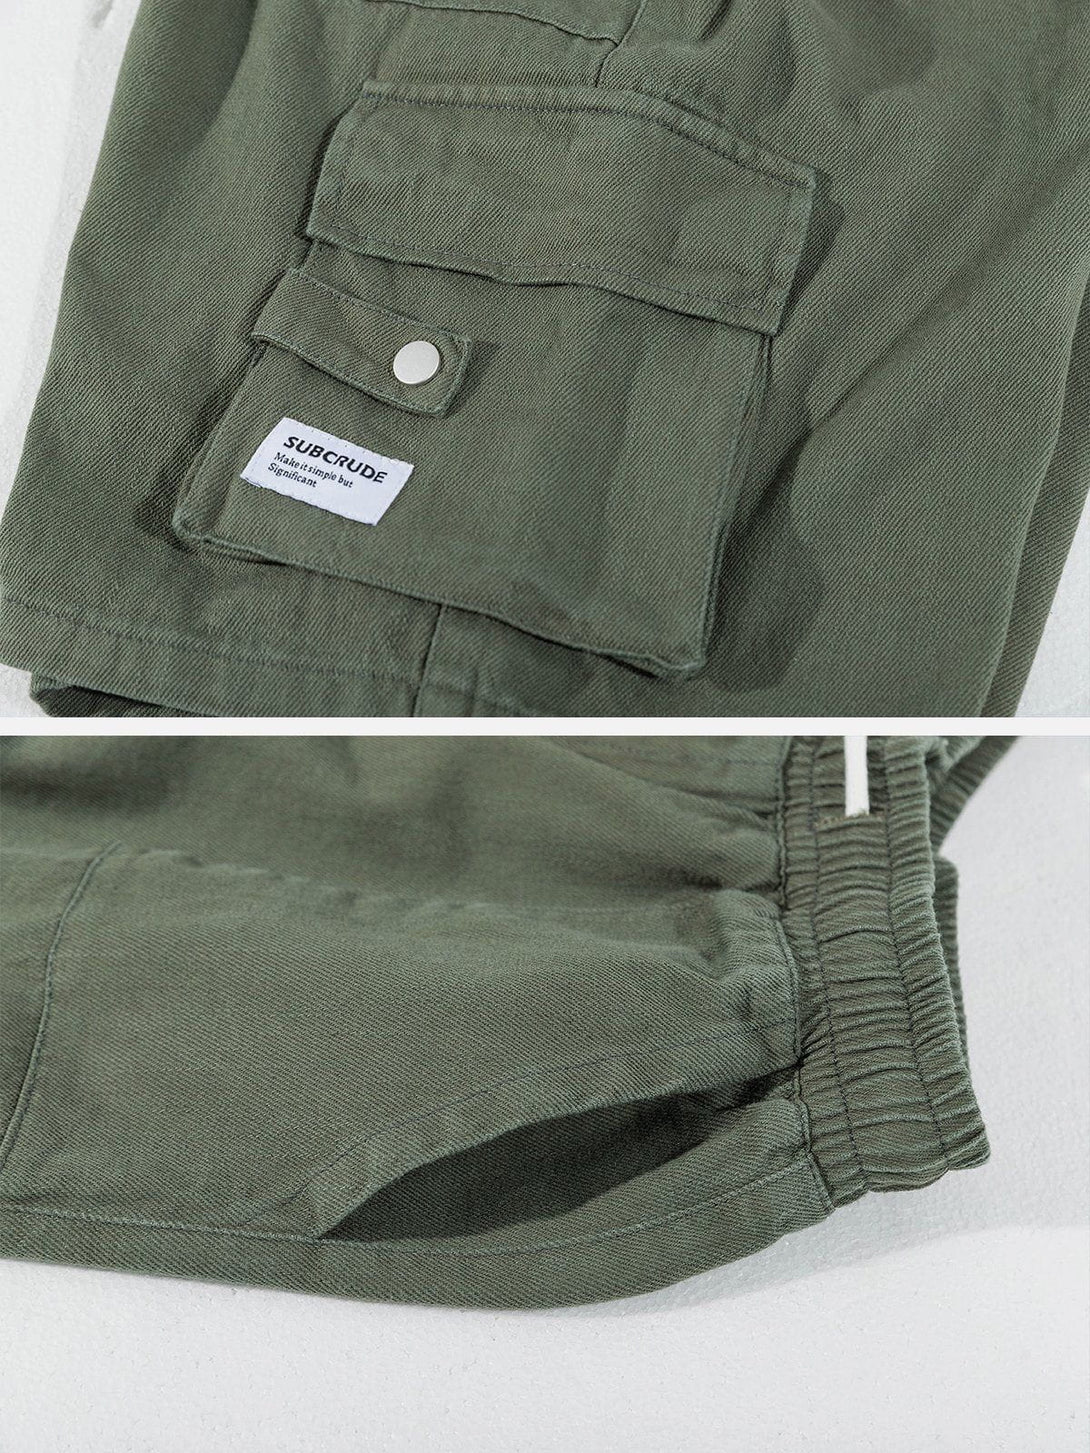 Majesda® - Large Pocket Patchwork Shorts outfit ideas streetwear fashion